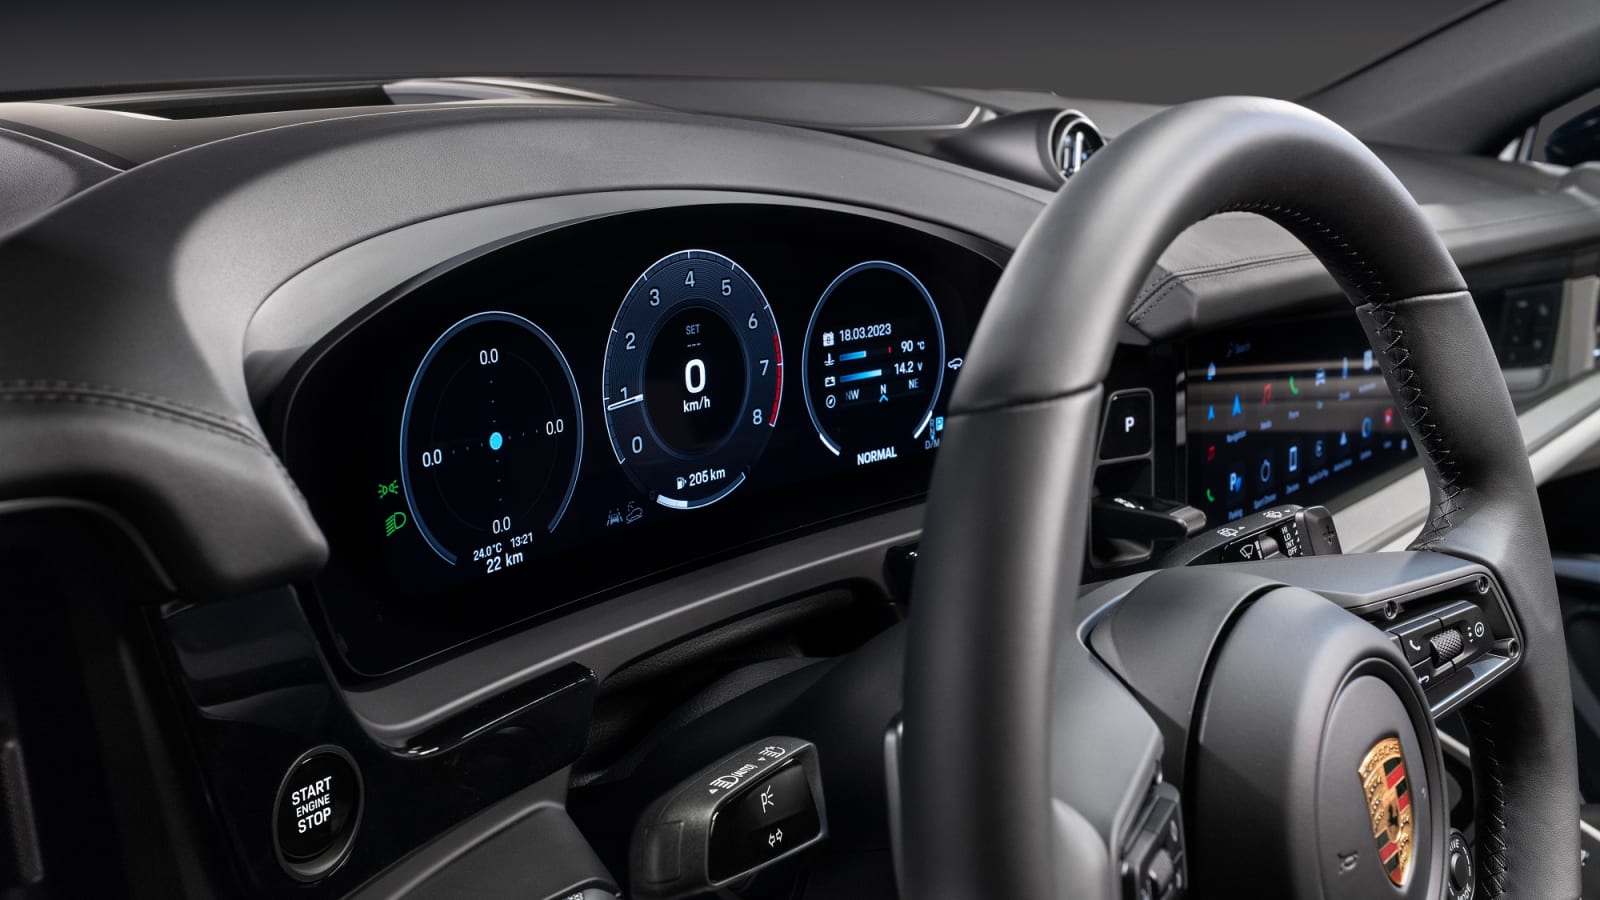 Porsche Cayenne gets a high-tech, driver-focused interior makeover